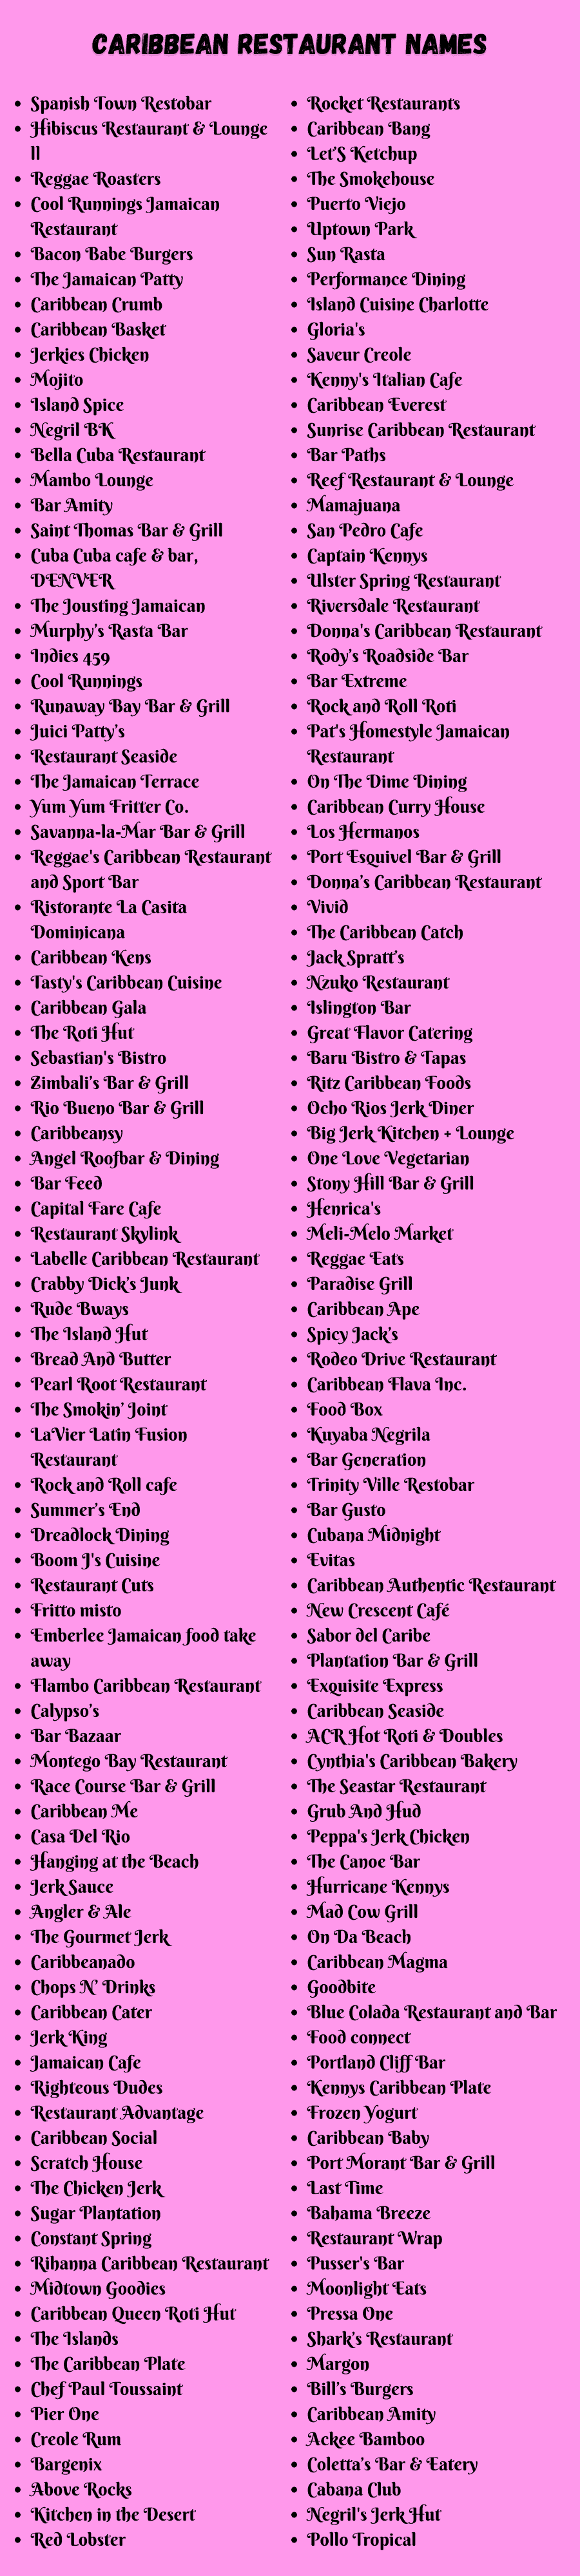 Caribbean Restaurant Names